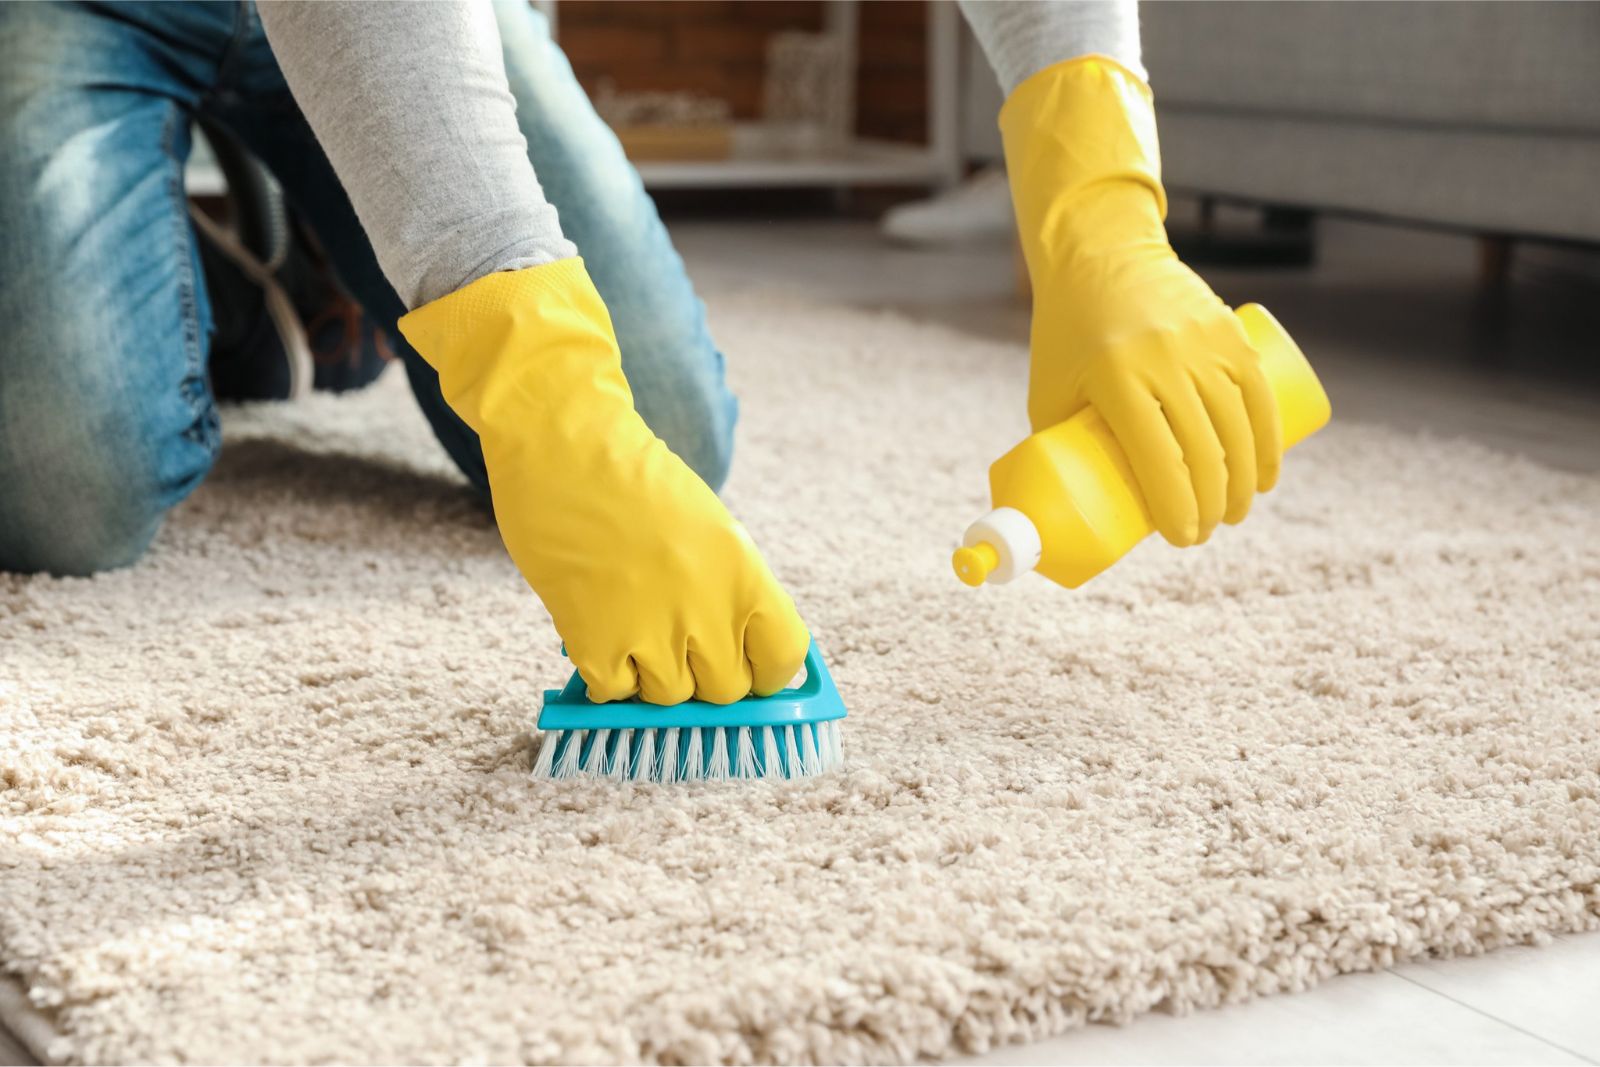  CLEANOVATION Rug Renovator/Carpet Cleaning Brush : Patio, Lawn  & Garden